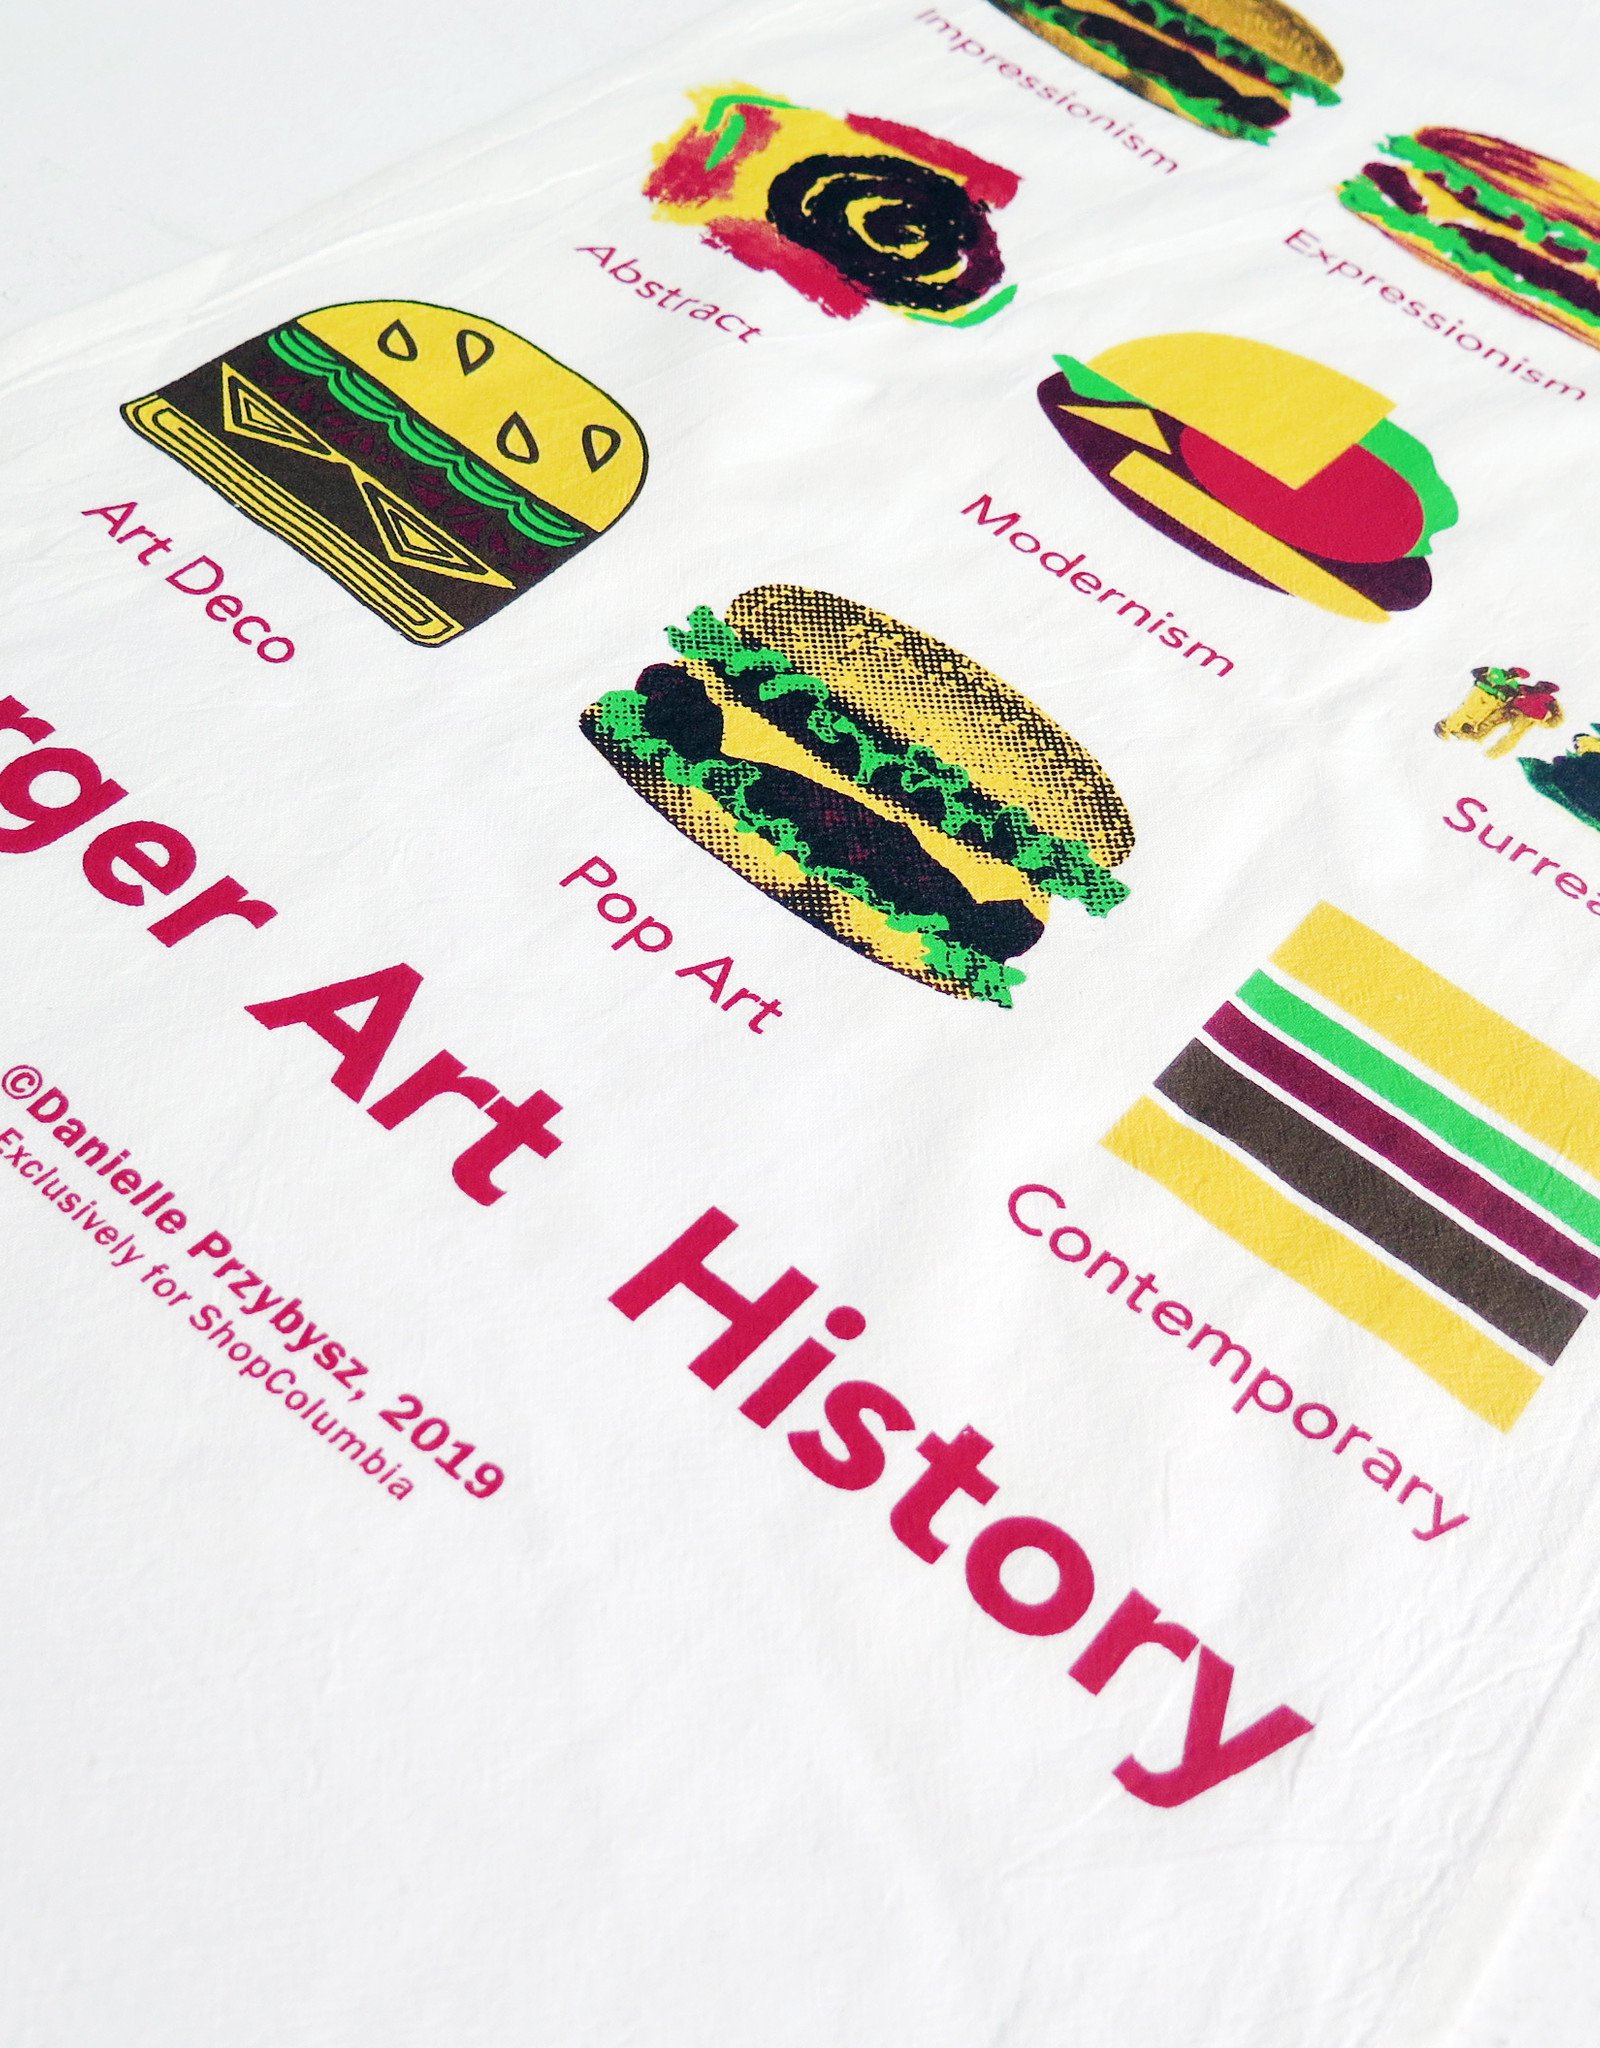 Buy Columbia, By Columbia “Burger Art History” Tea Towel - Buy Columbia, By Columbia